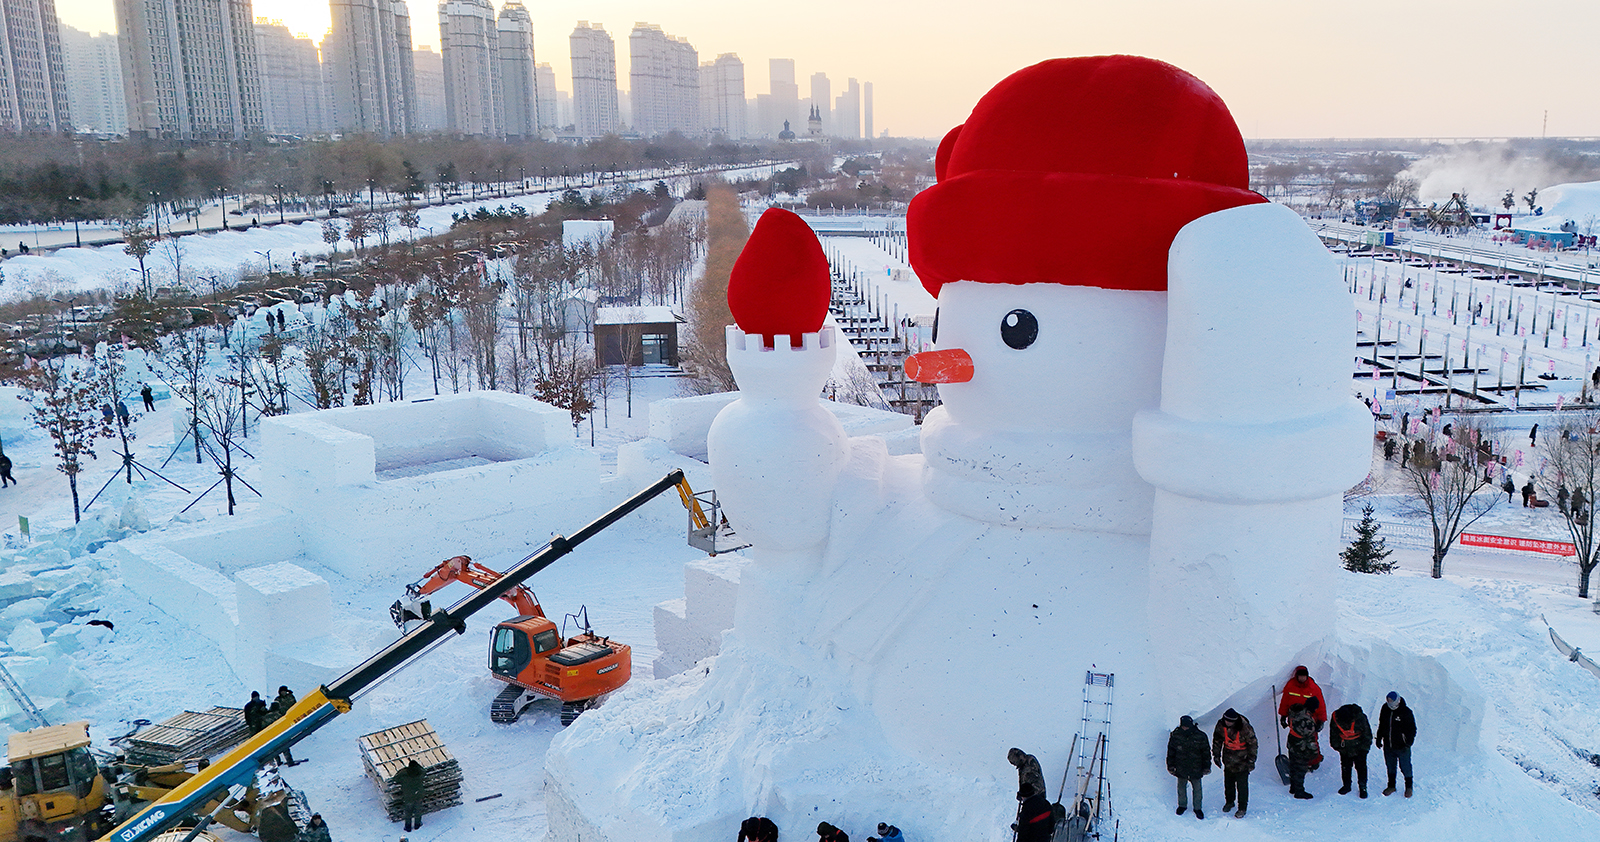 Harbin's 20-meter snowman captivates tourists and locals 